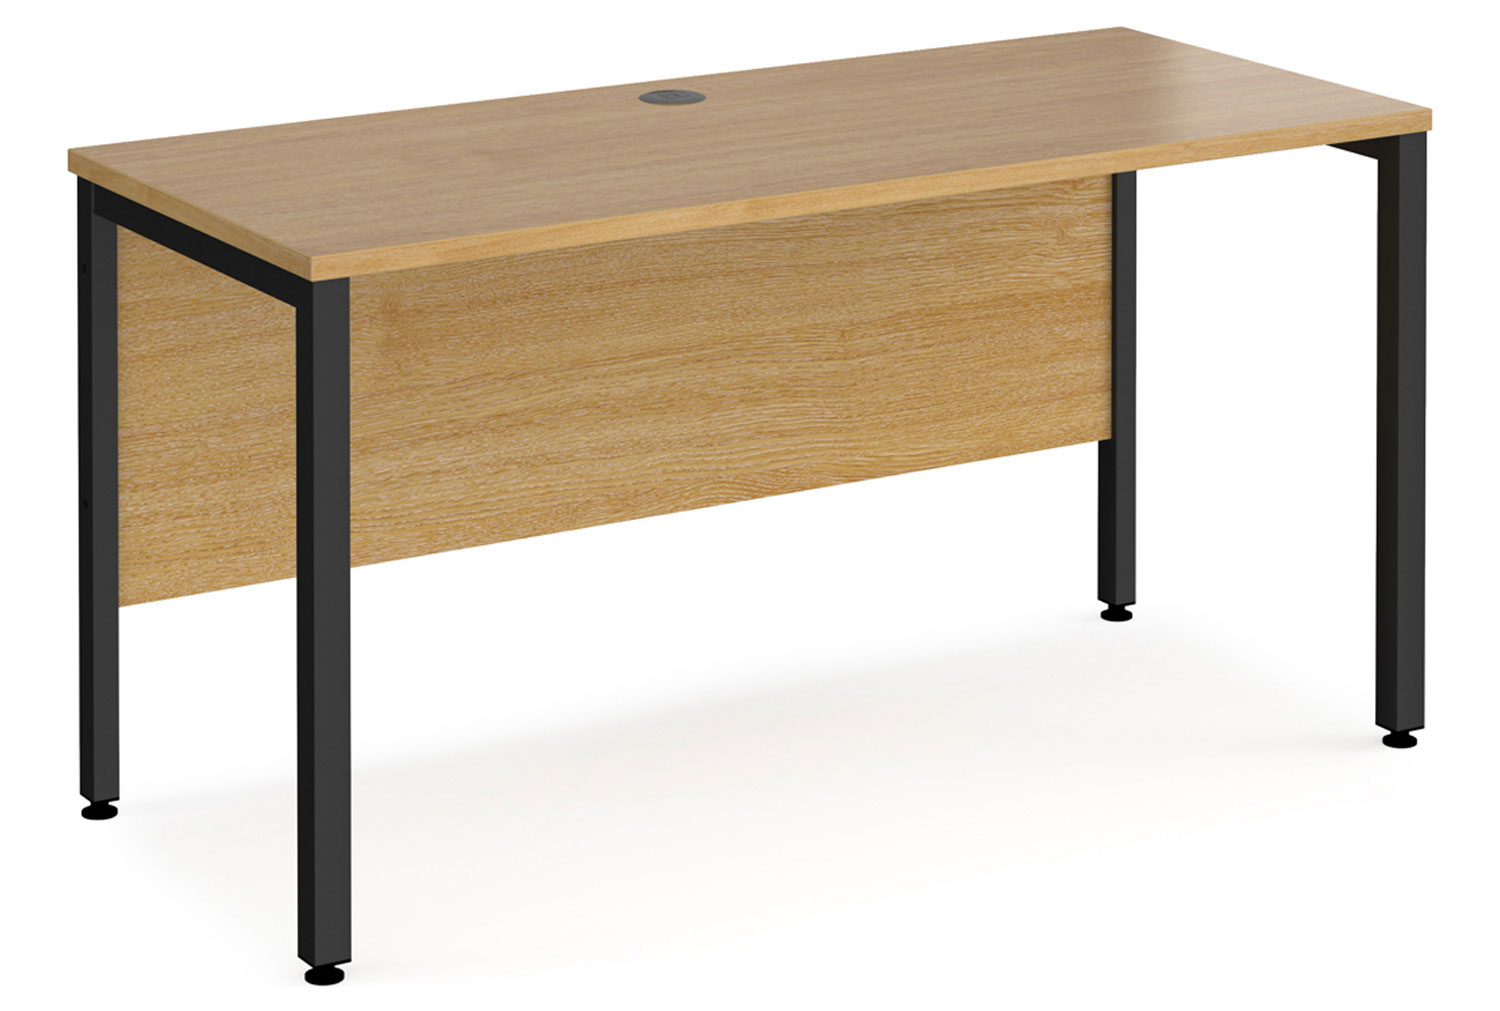 Value Line Deluxe Bench Narrow Rectangular Office Desks (Black Legs), 140wx60dx73h (cm), Oak